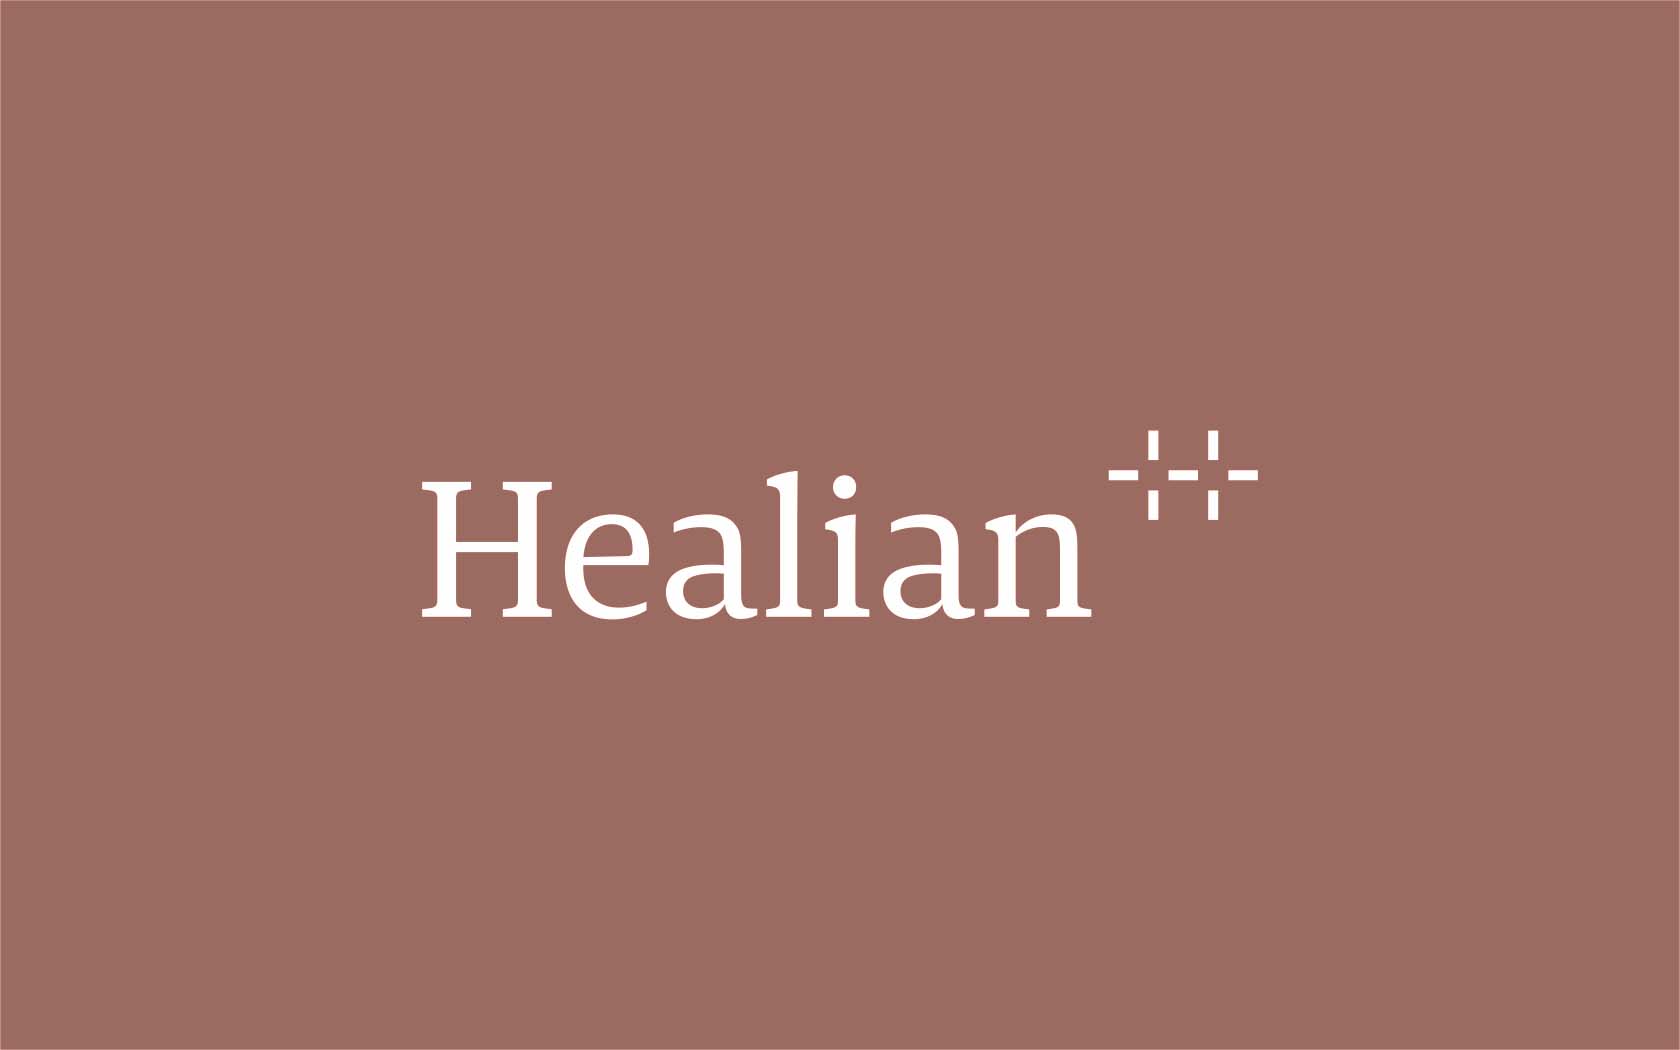 Healian brand logo in white